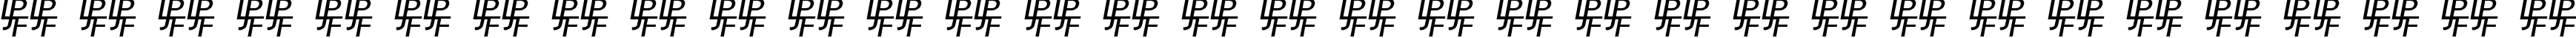 Пример написания русского алфавита шрифтом NewStyleTitling Embossed